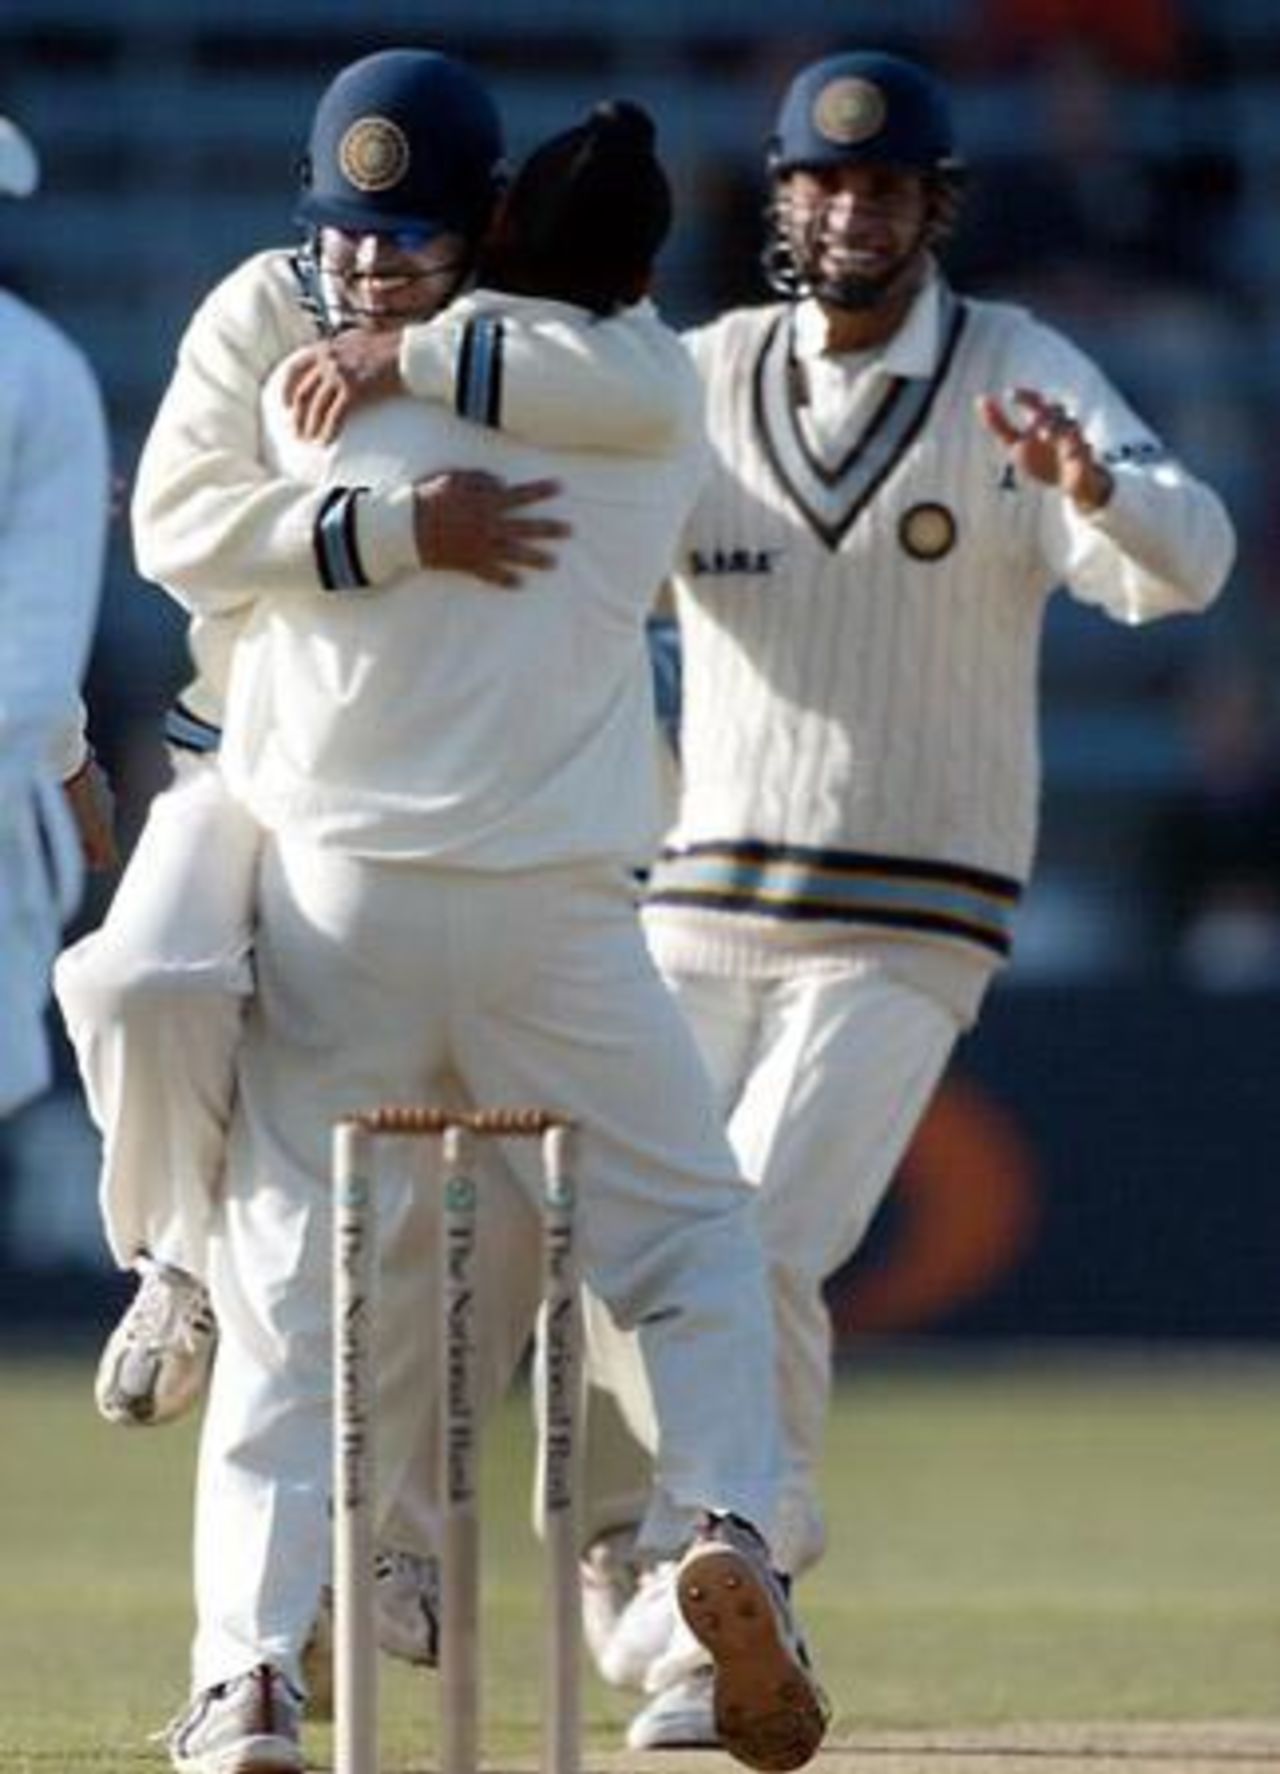 Indian fielder Virender Sehwag (left) hugs Harbhajan Singh to celebrate the dismissal of New Zealand batsman Jacob Oram, lbw off the bowling of Harbhajan for 0, as team-mate VVS Laxman looks on. 1st Test: New Zealand v India at Basin Reserve, Wellington, 12-16 December 2002 (13 December 2002).